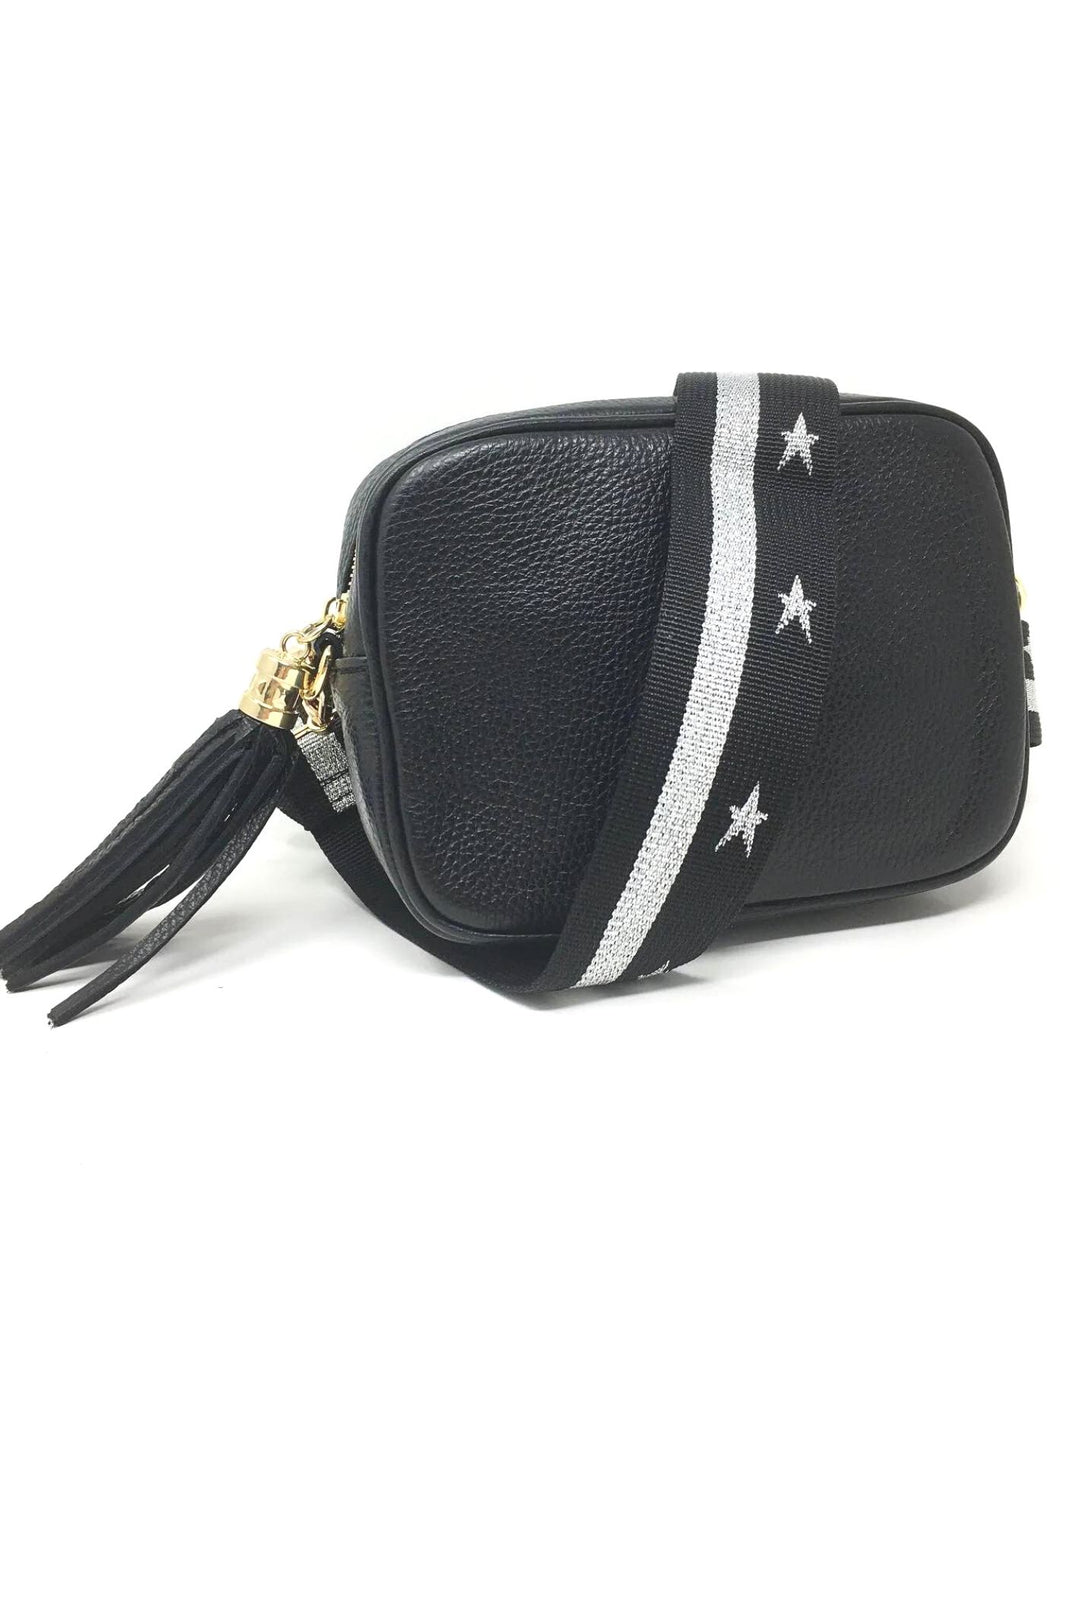 Star & Stripe Bag Strap Black Silver - Sugarplum Boutique